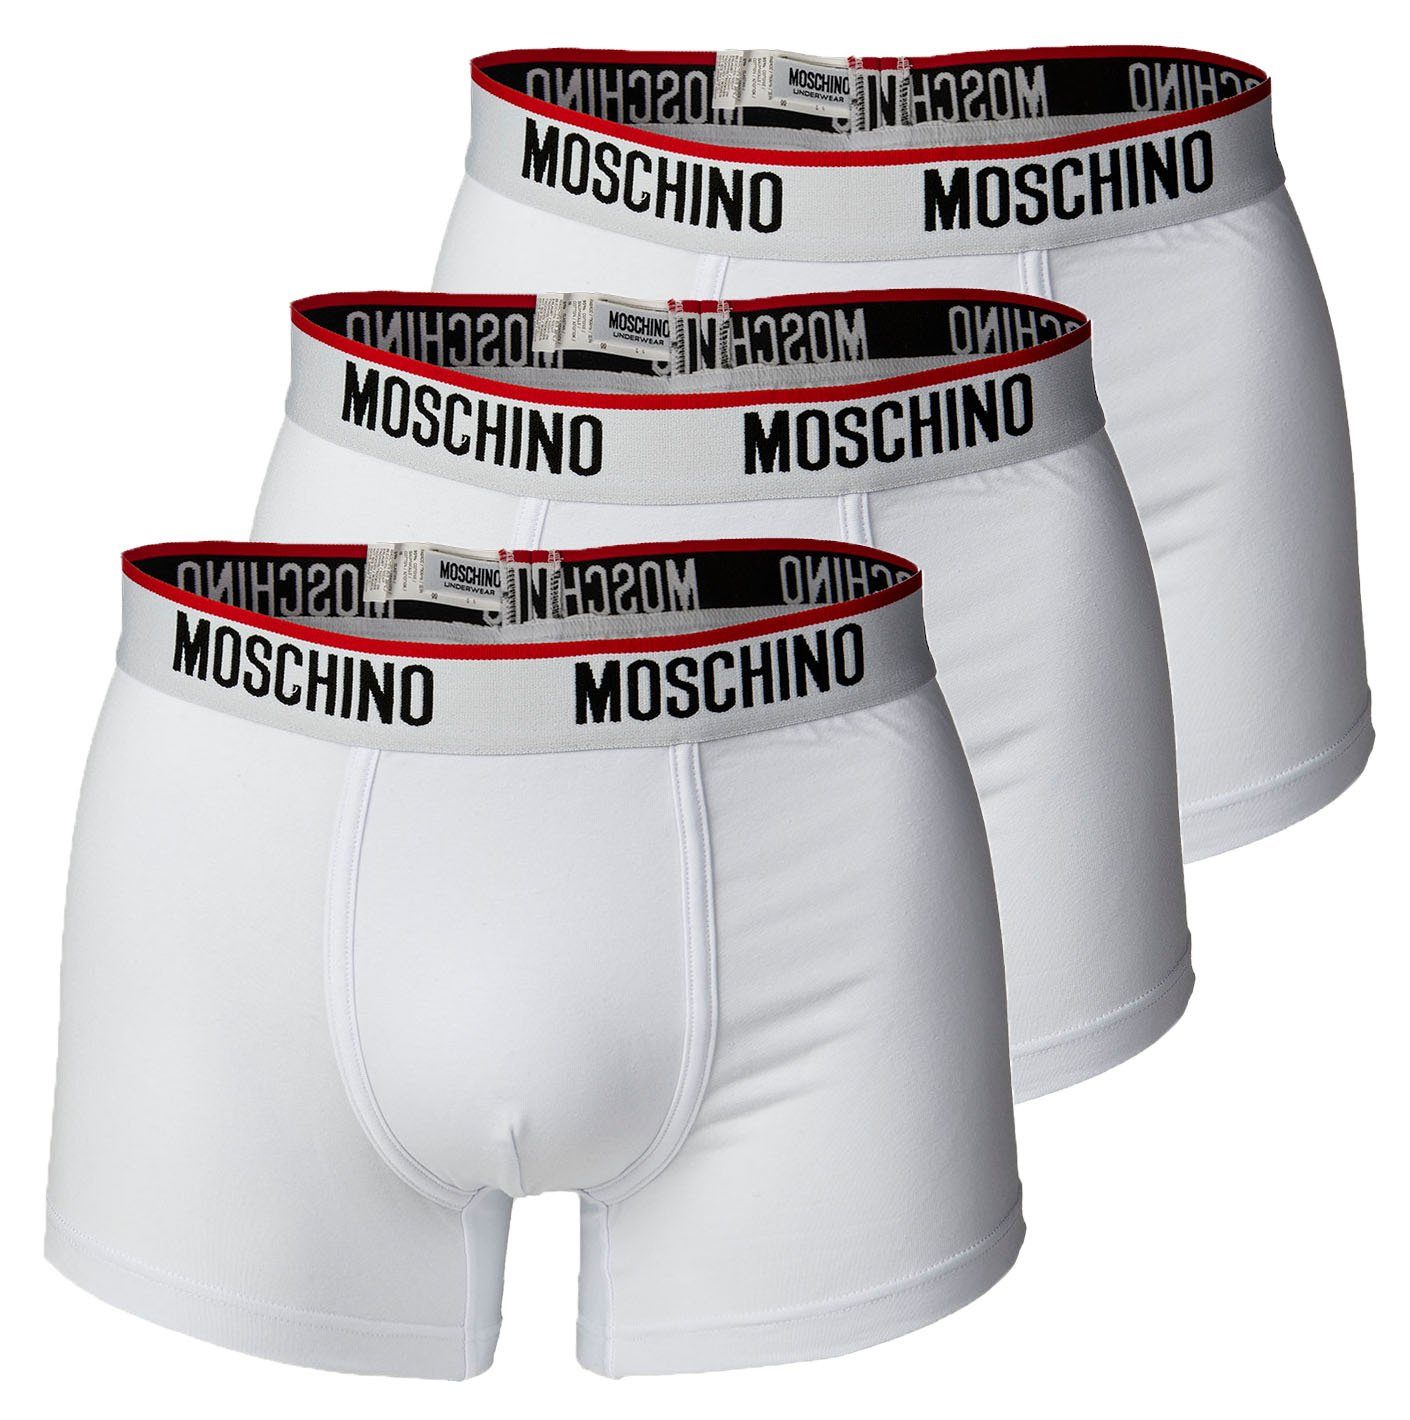 Moschino Boxer Herren Shorts 3er Pack - Pants, Unterhose, Cotton